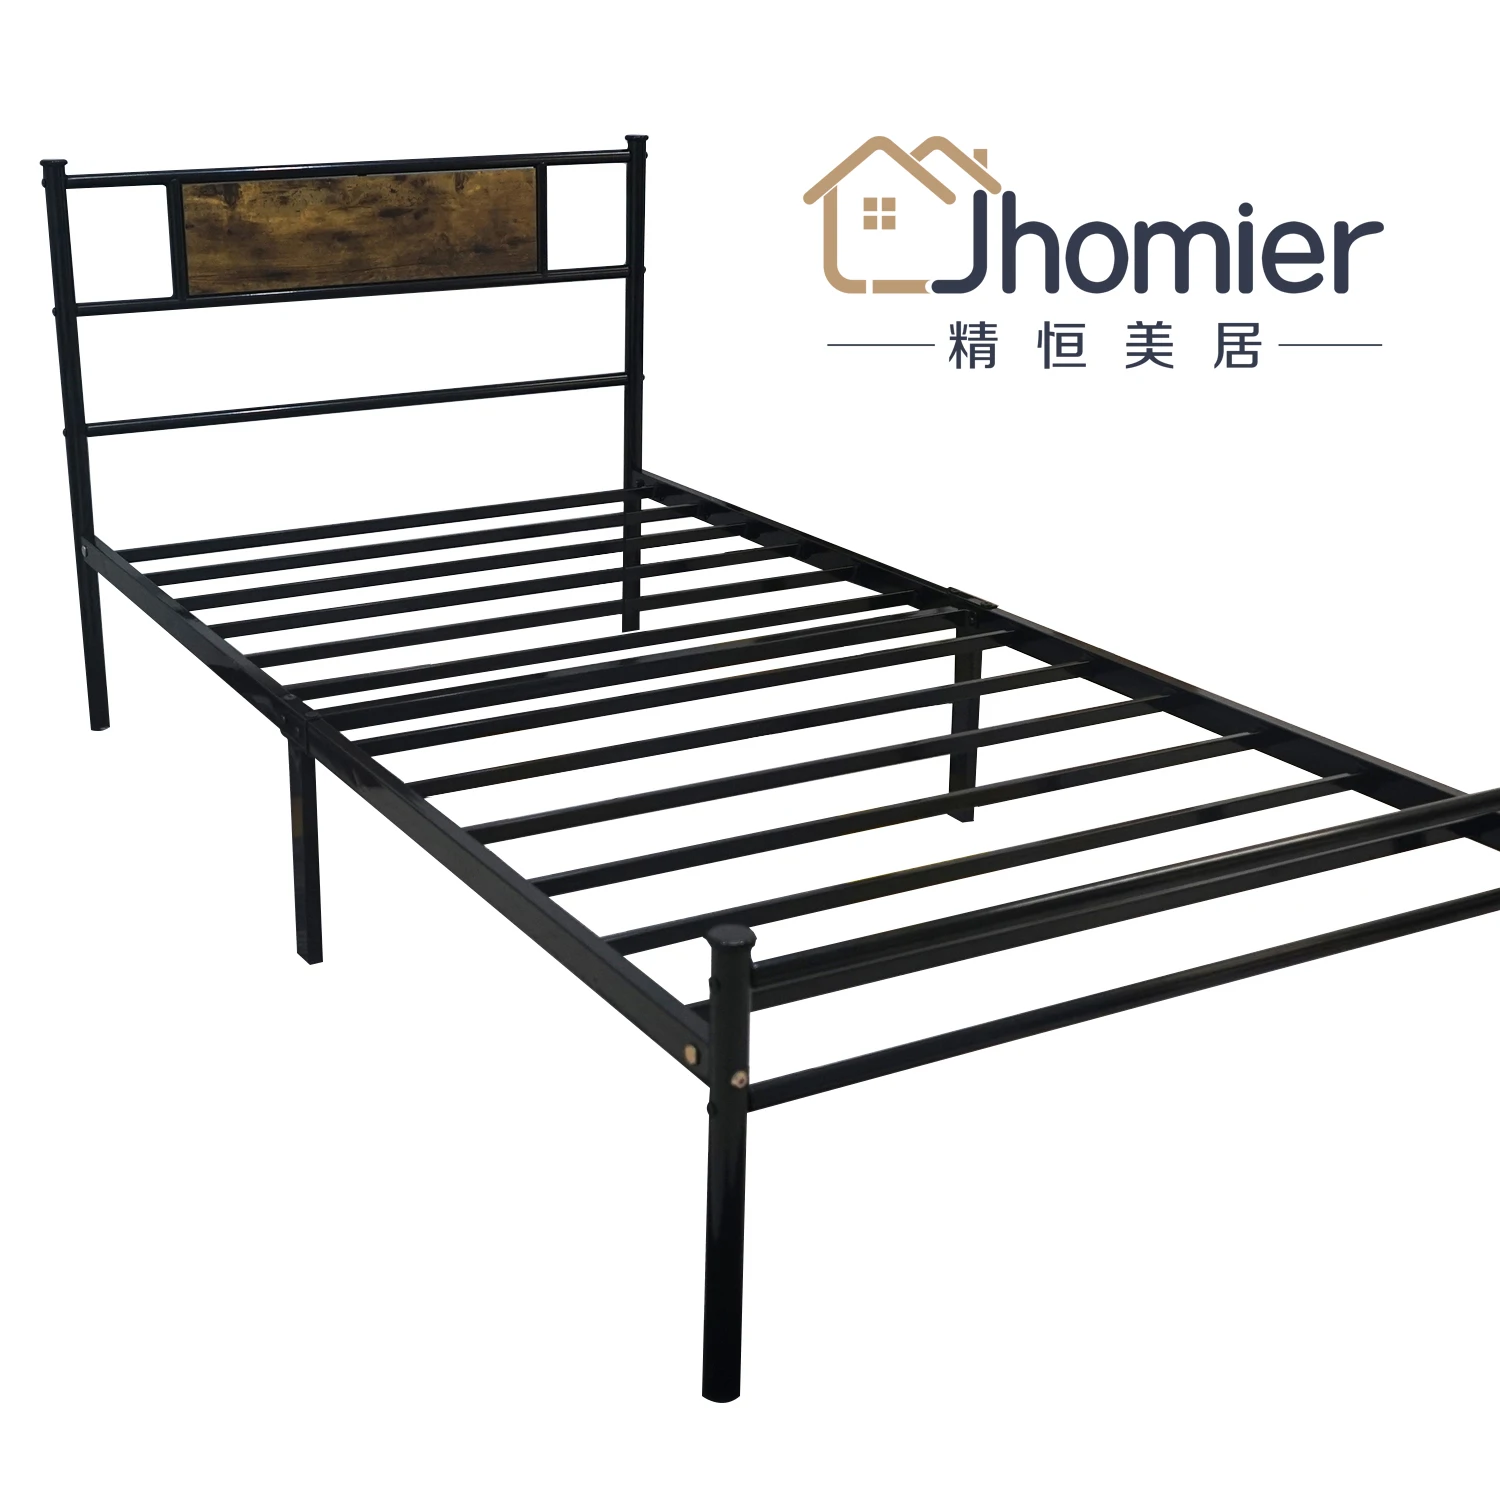 Metal brackets for wood metal bed frame & wood bedroom bed luxury & wooden bed design